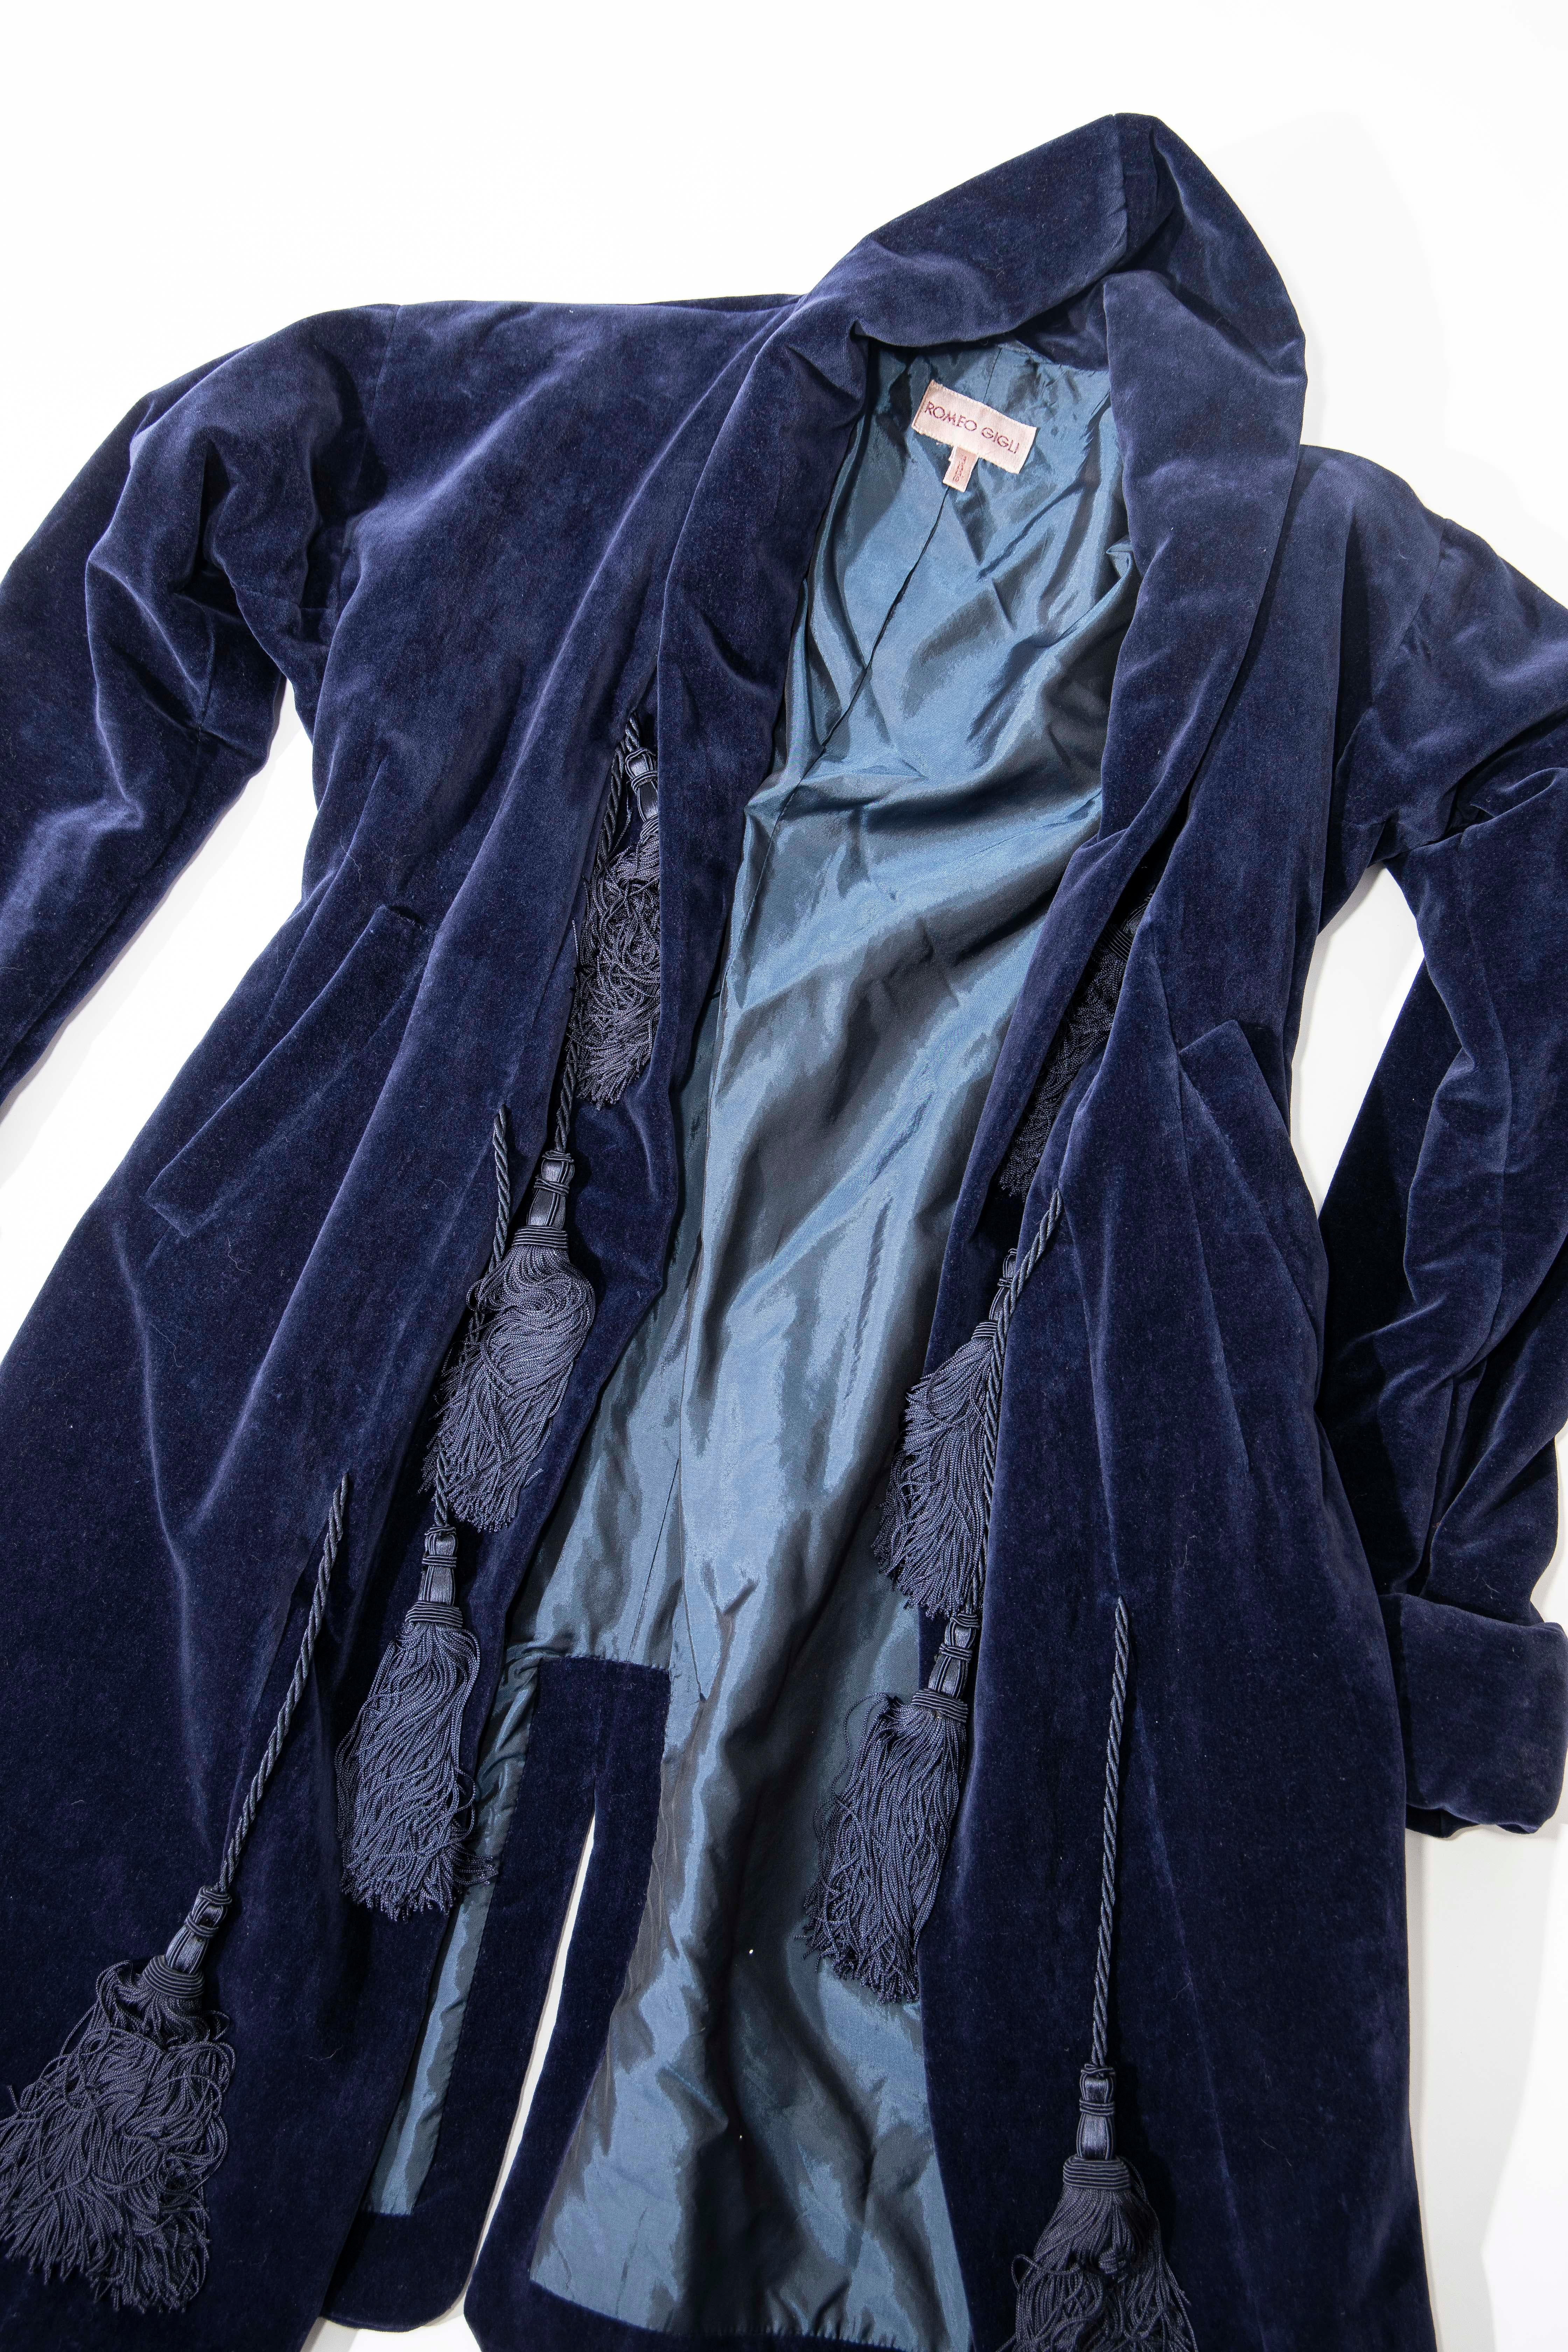 Romeo Gigli Navy Blue Cotton Velvet Appliquéd Tassels Kimono Jacket, Fall 1994 For Sale 5